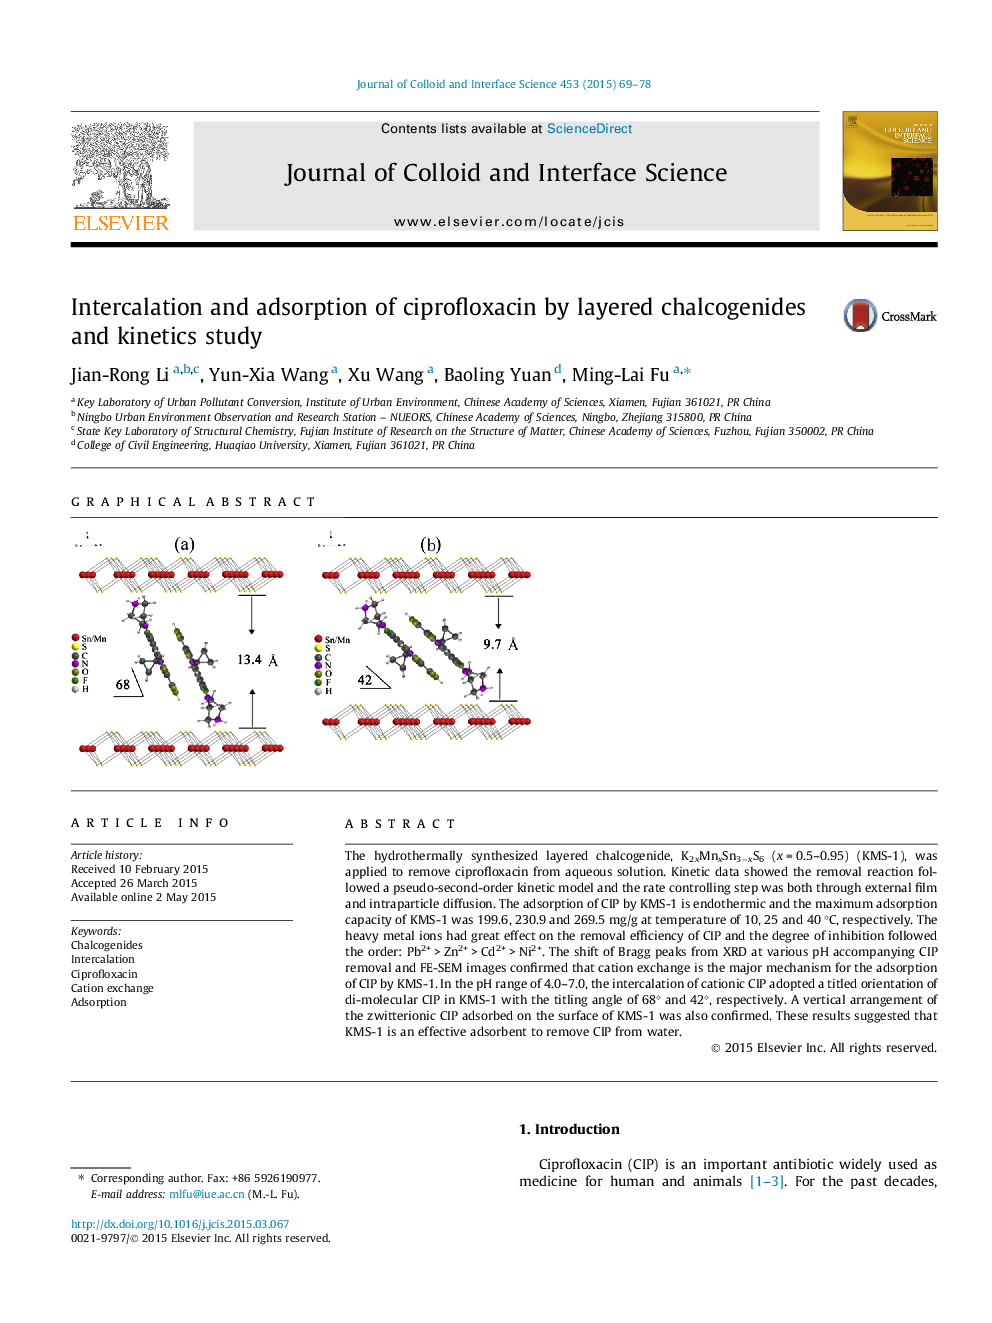 Intercalation and adsorption of ciprofloxacin by layered chalcogenides and kinetics study